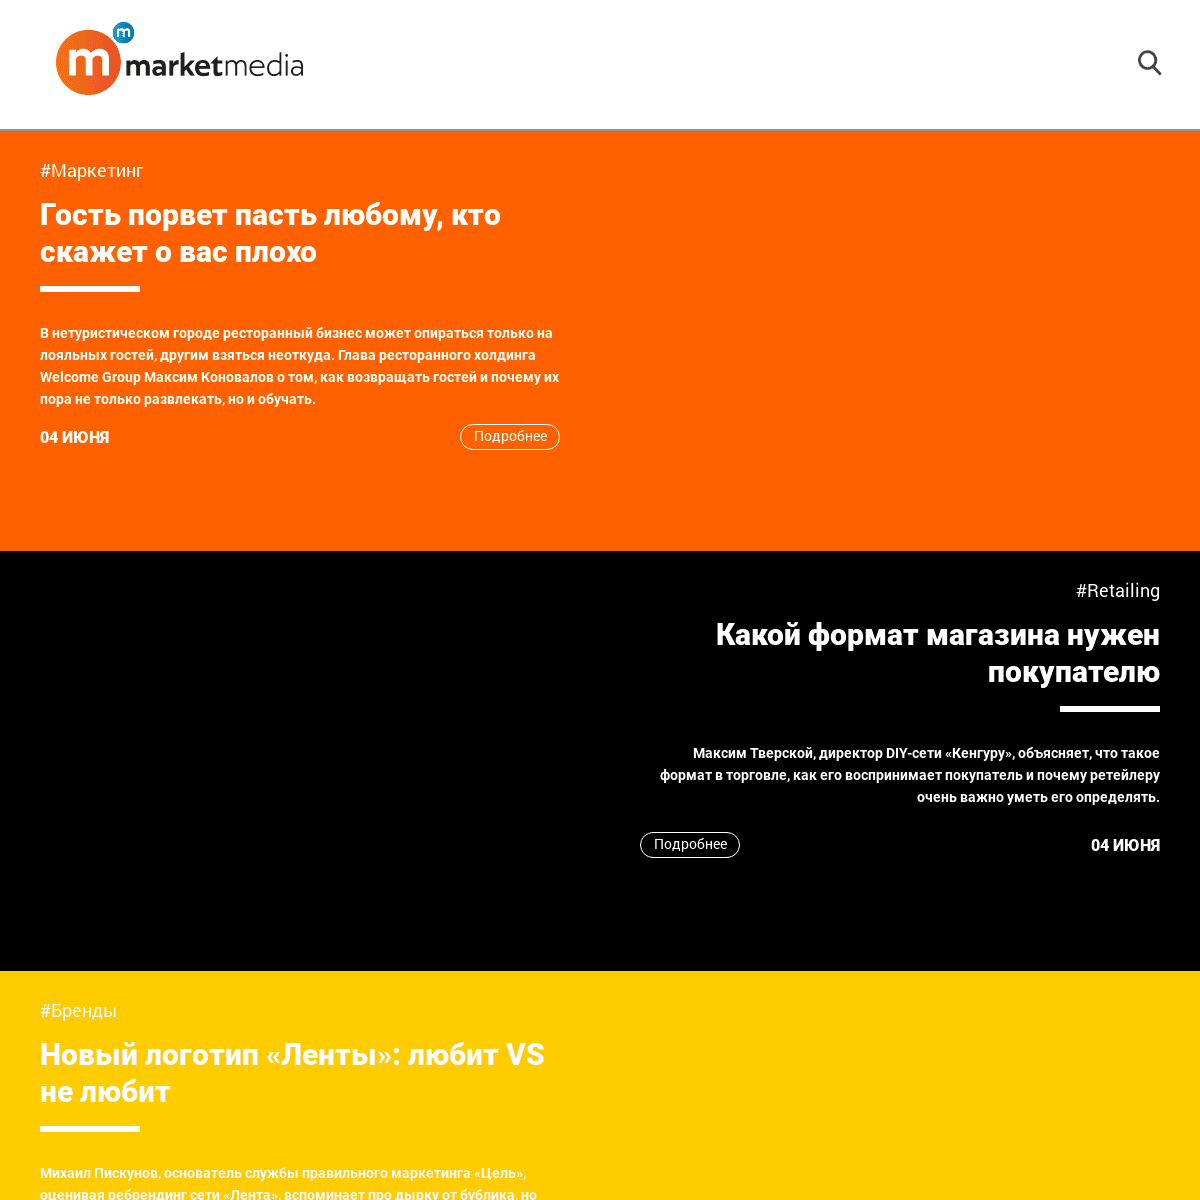 A complete backup of https://marketmedia.ru